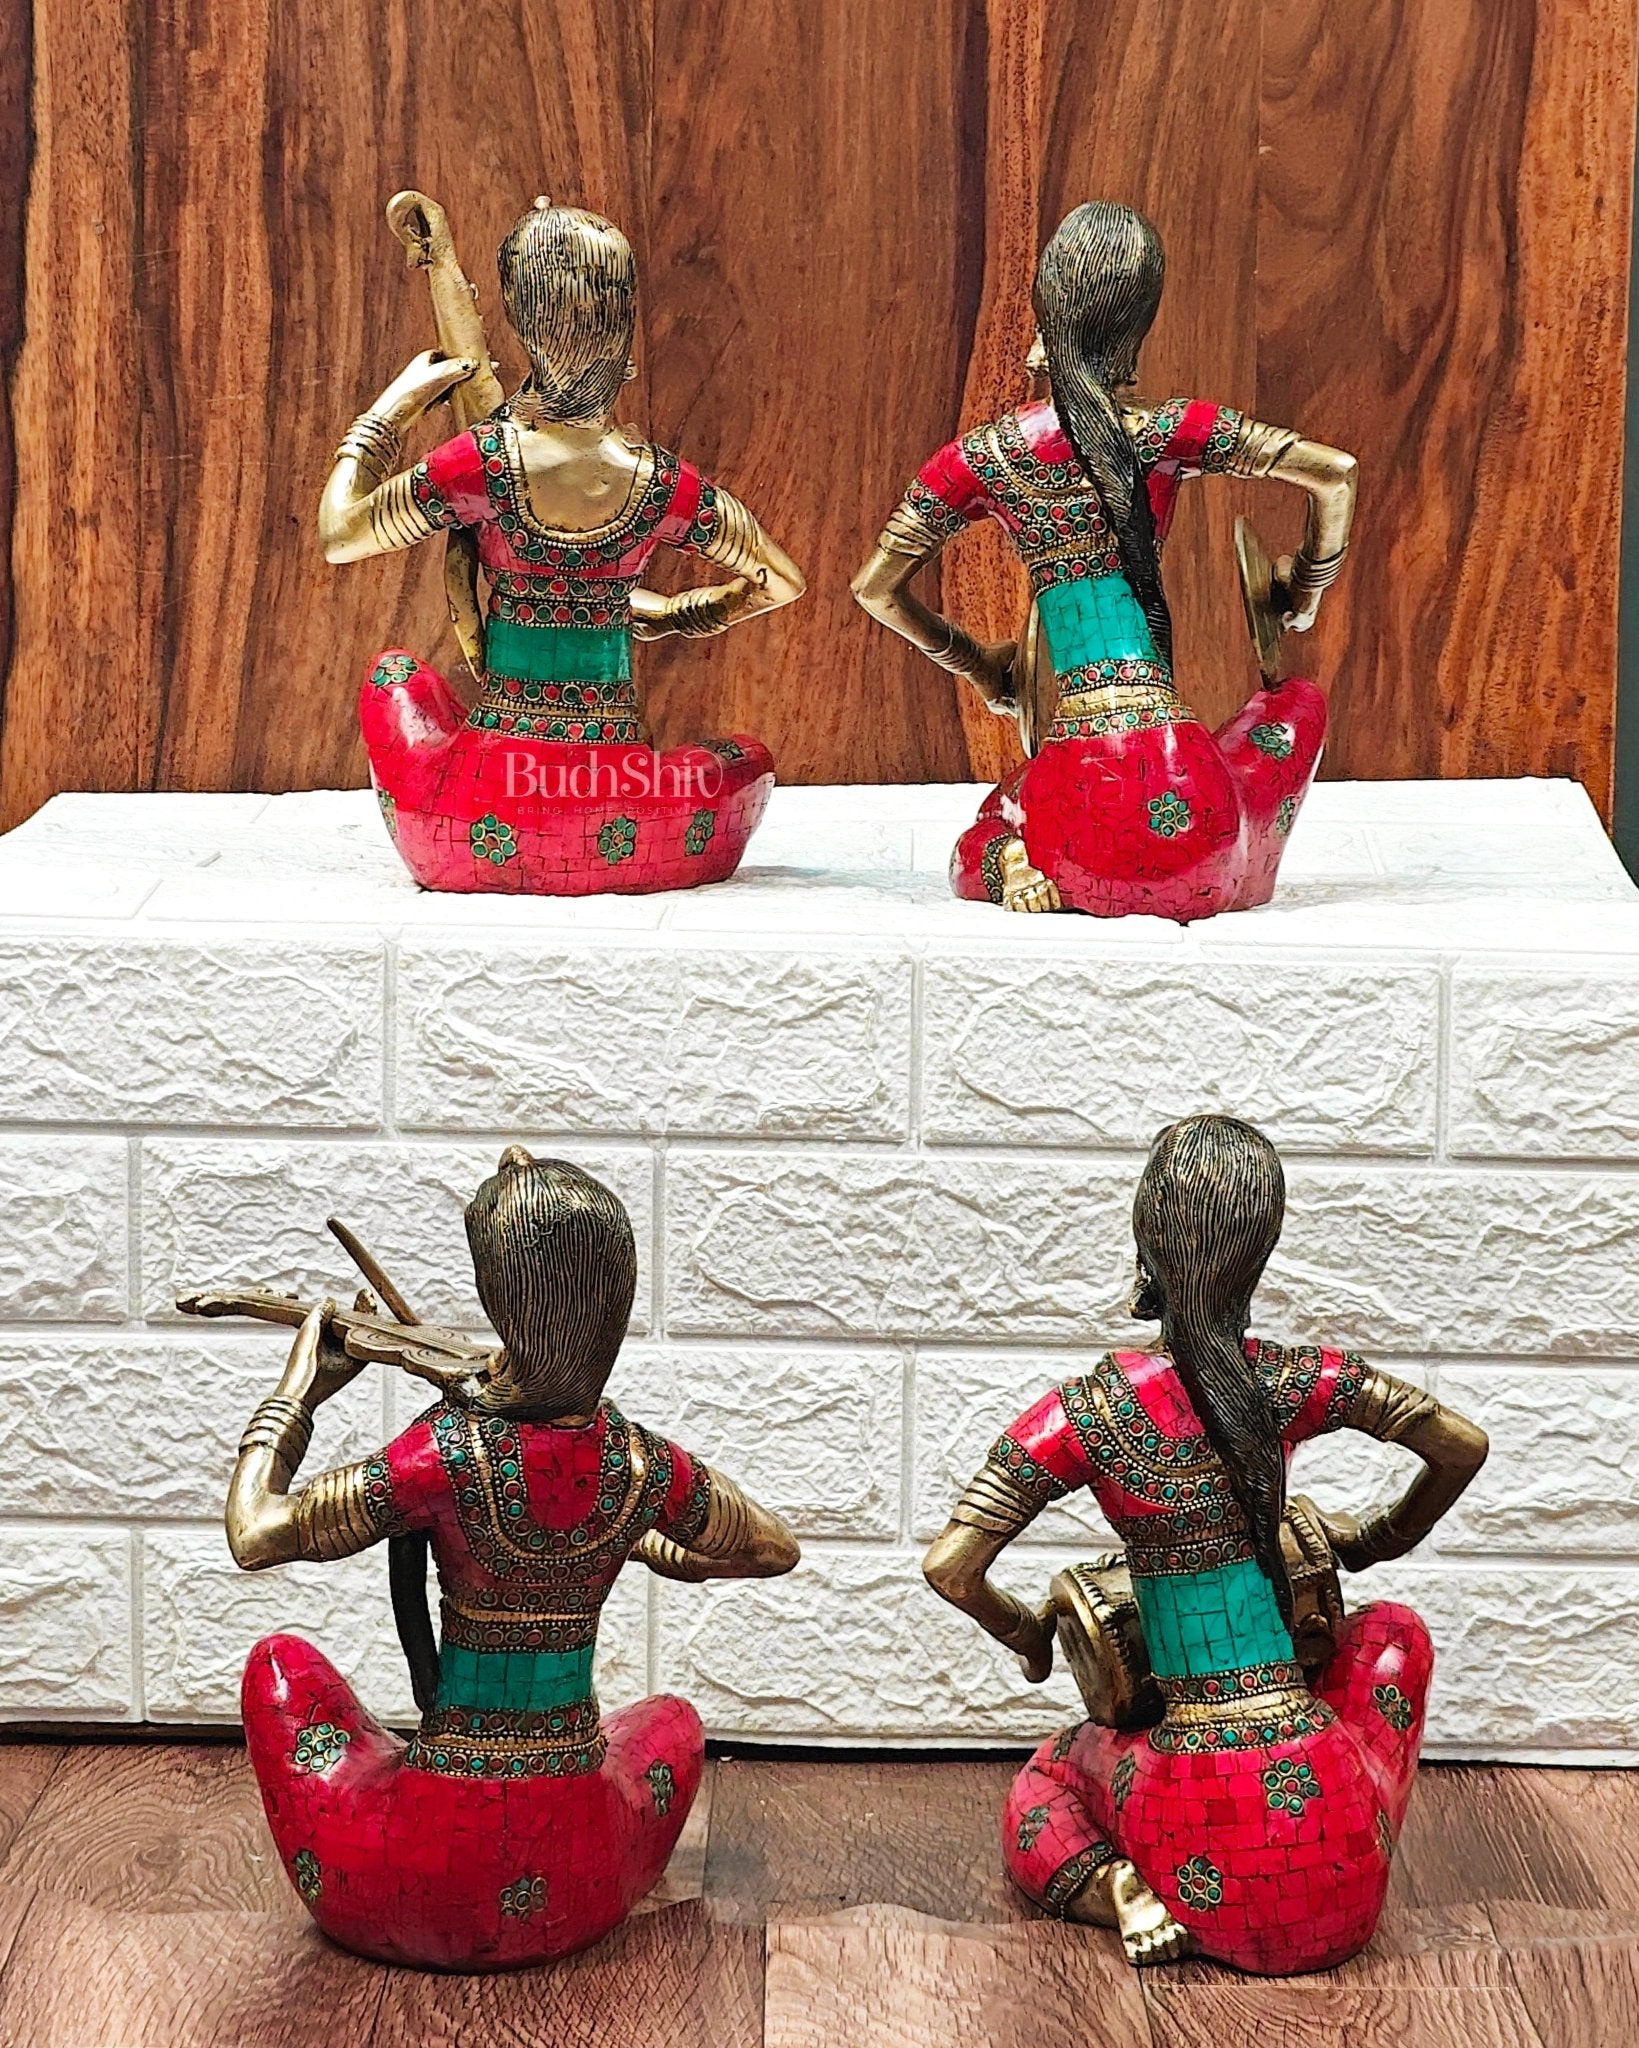 Superfine Brass Set of 4 Tribal Lady Musicians - 11 Inch - Budhshiv.com